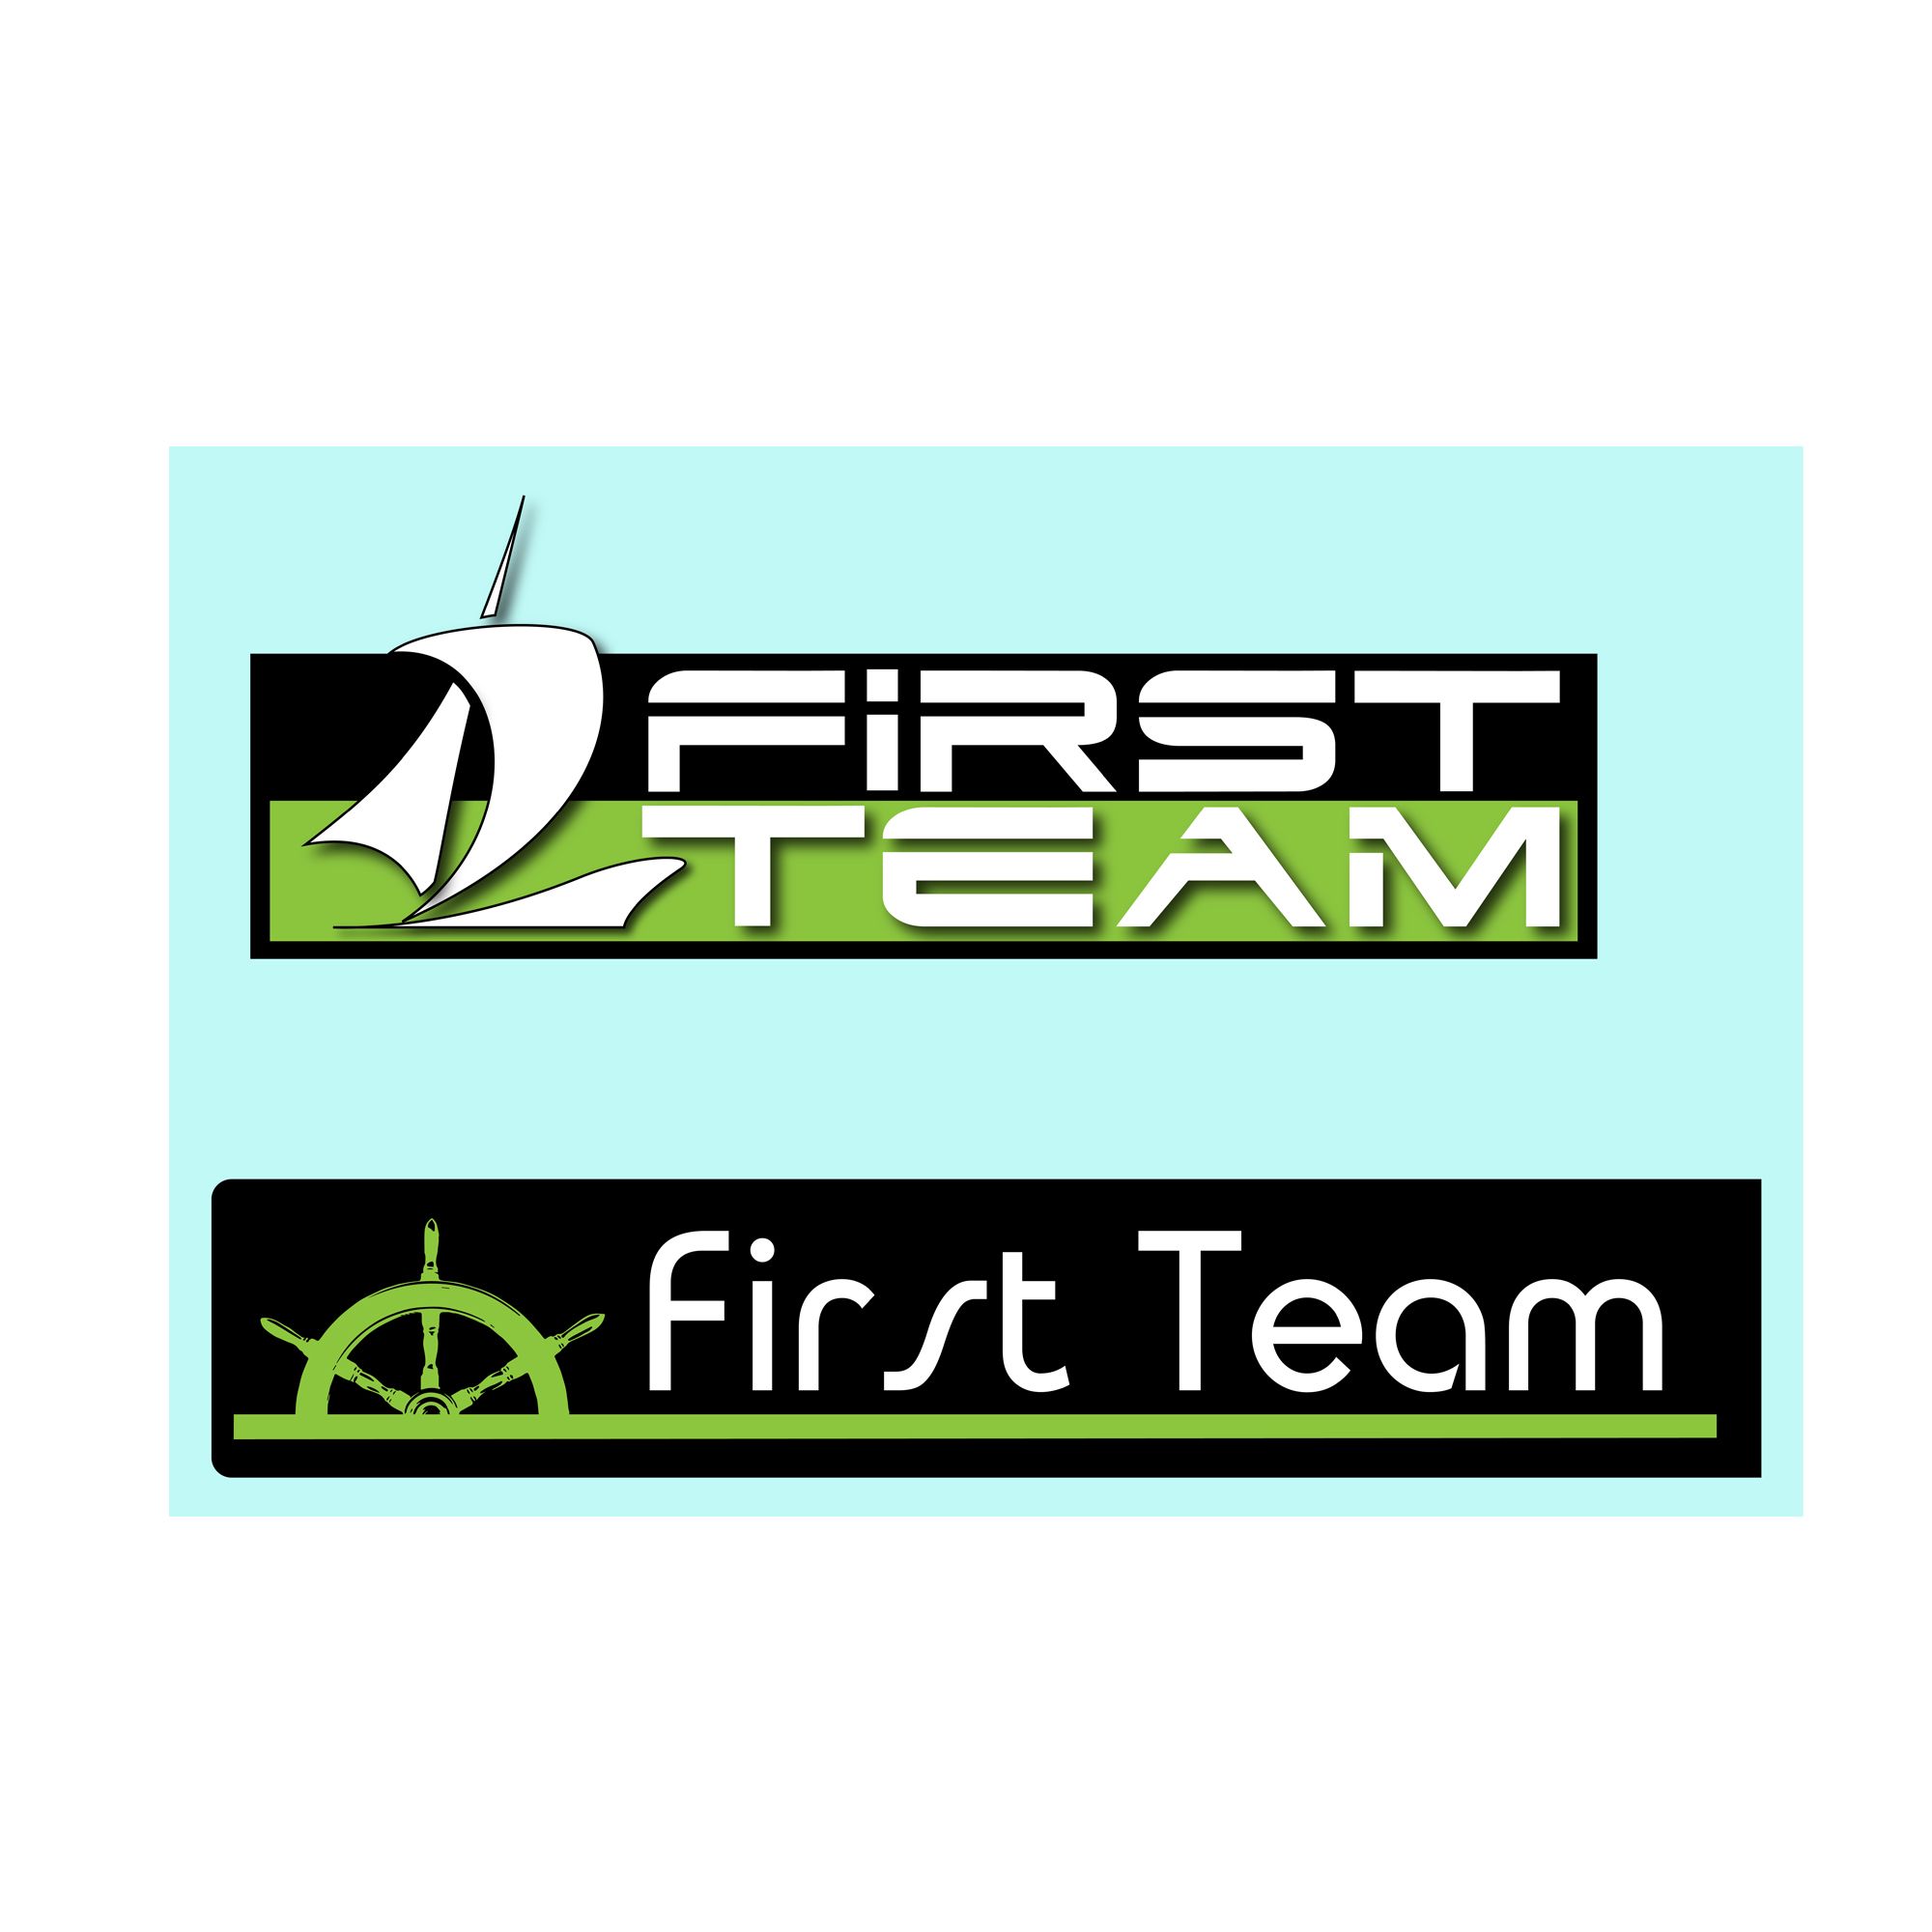 Логотип для продавца яхт - компании First Team - дизайнер atmannn